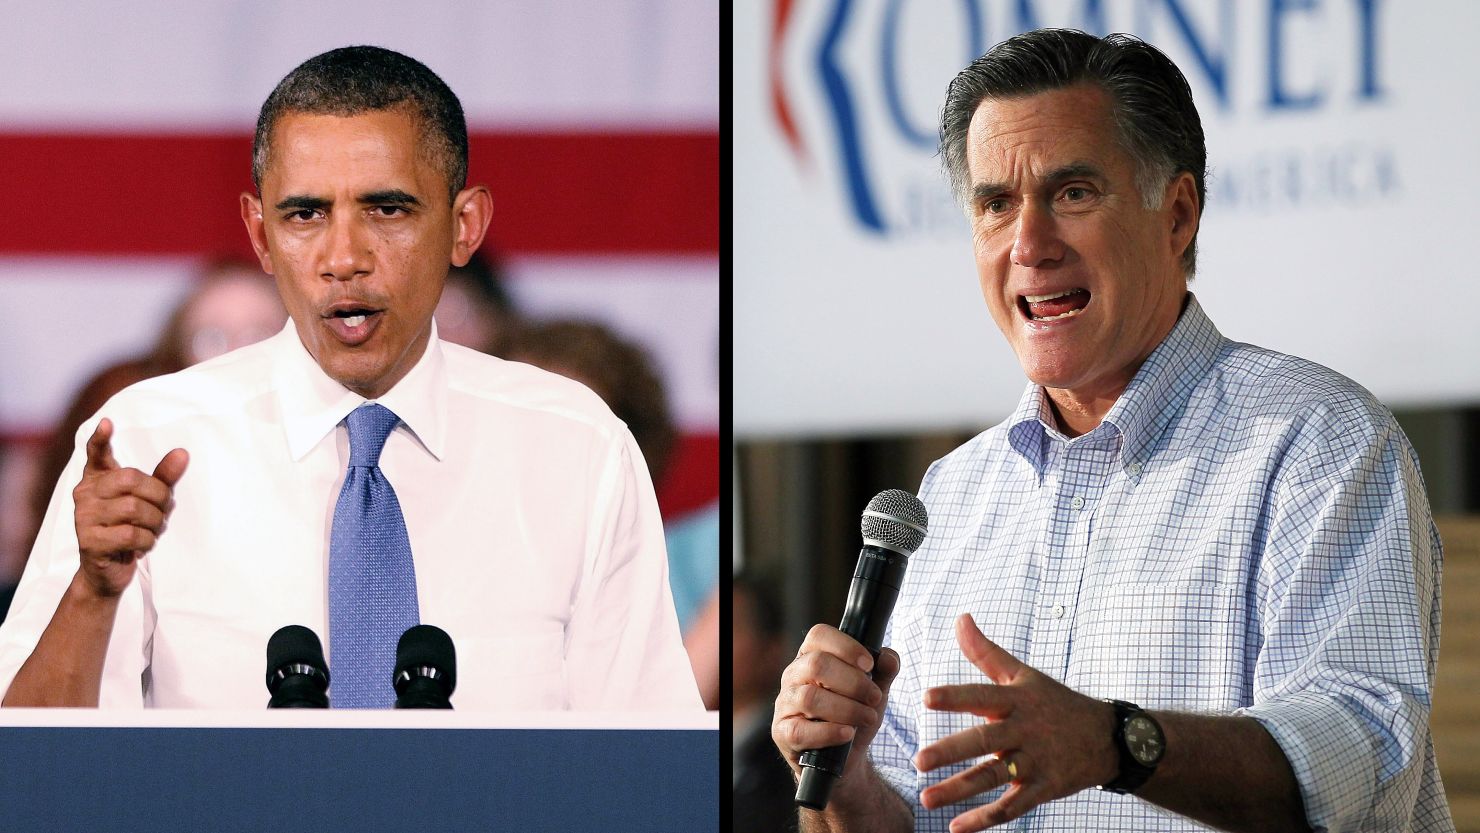 Who's a more visionary leader, Barack Obama or Mitt Romney?